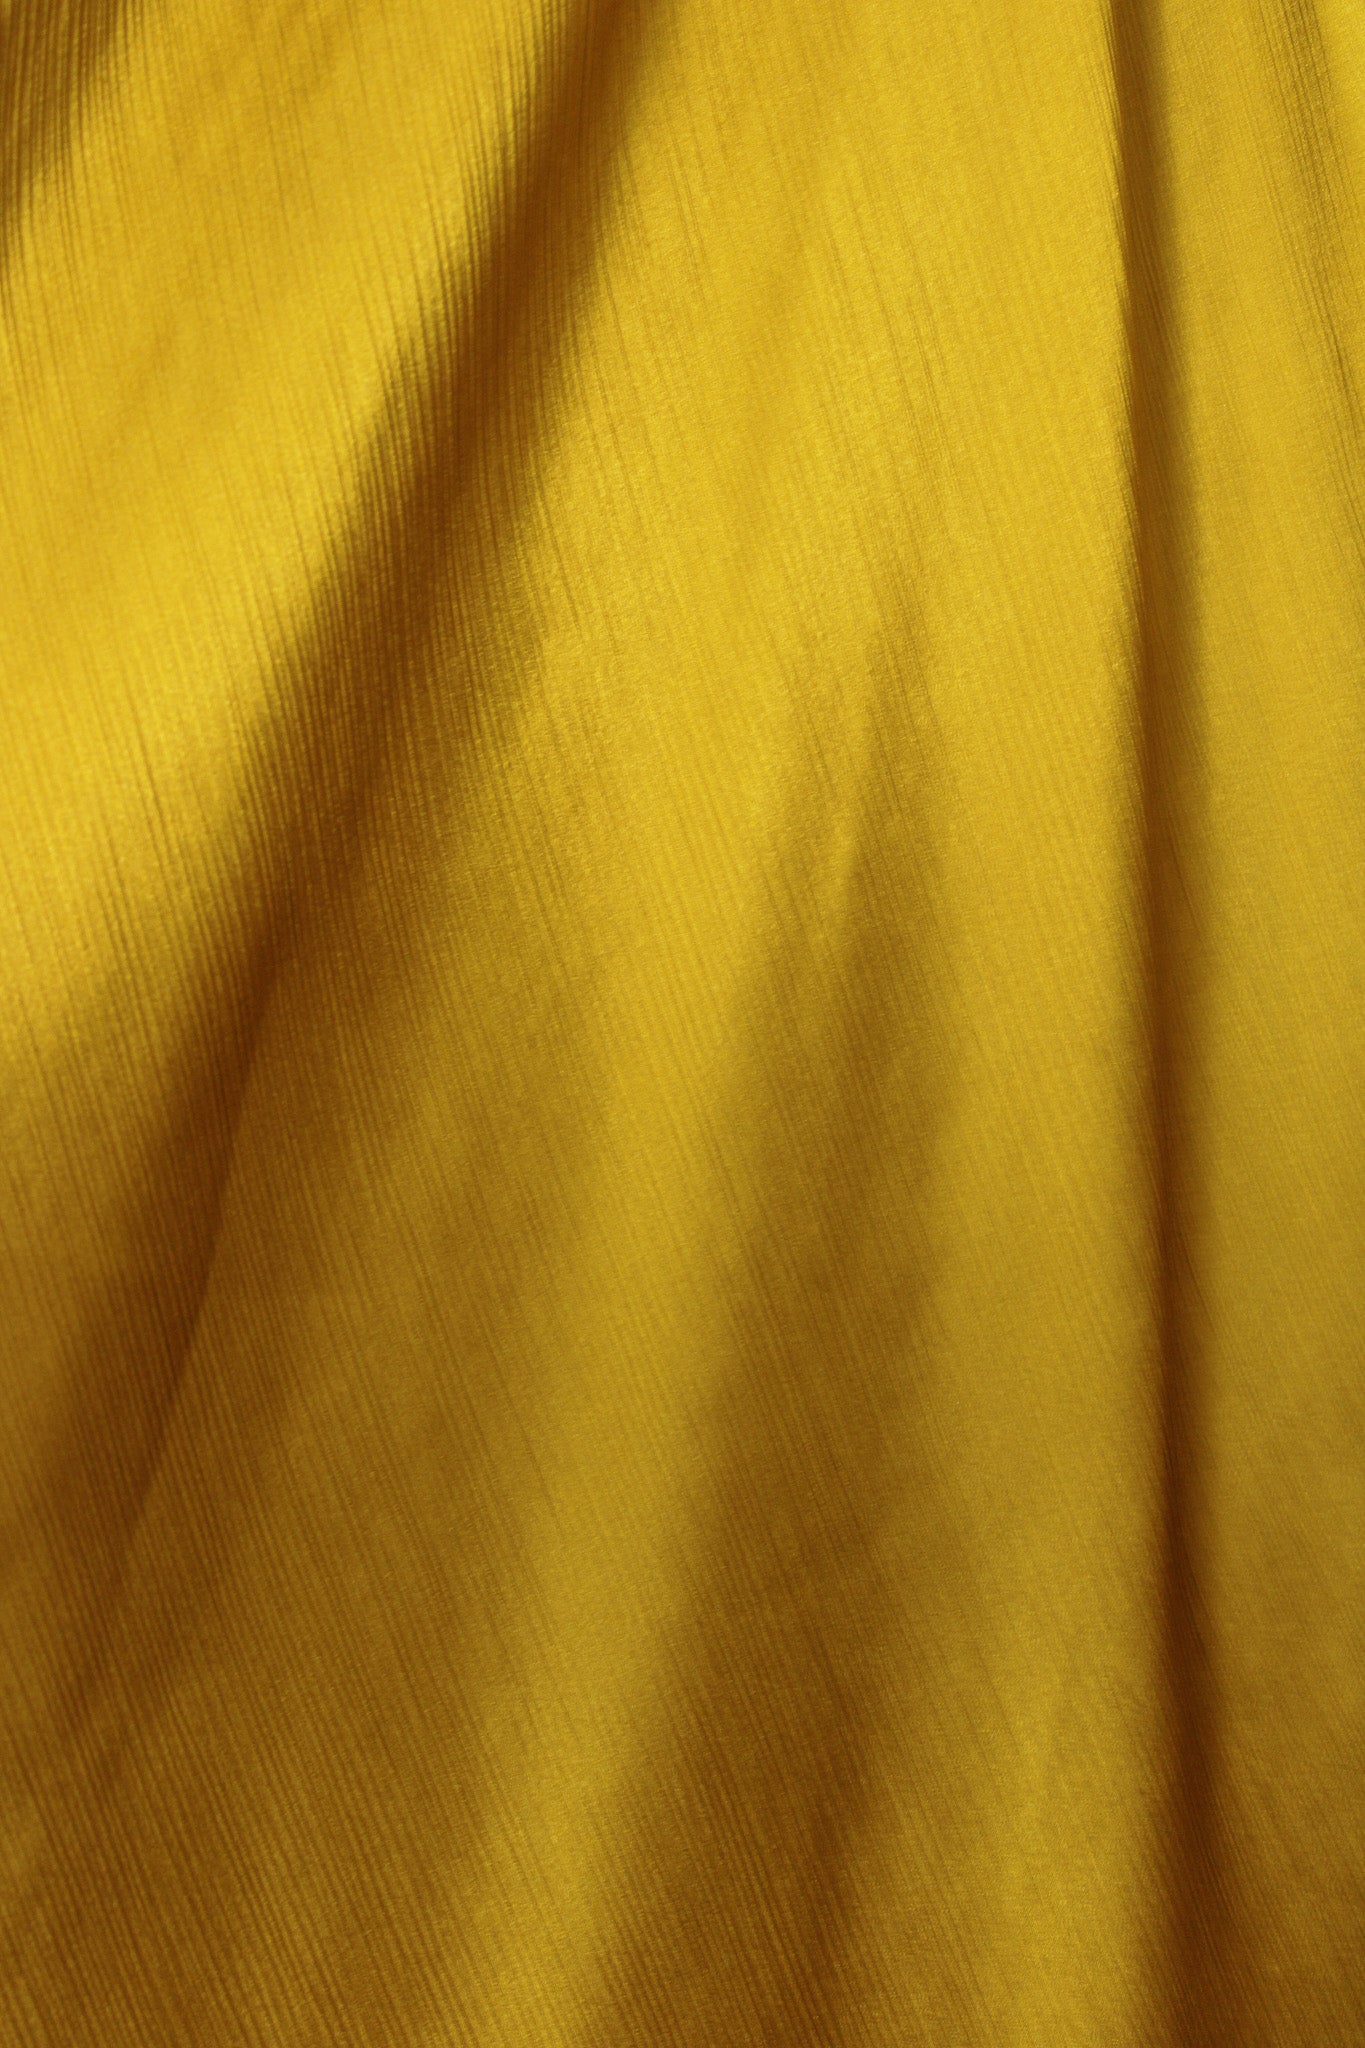 A-Line Skirt in Pale Copper & Arabian Gold